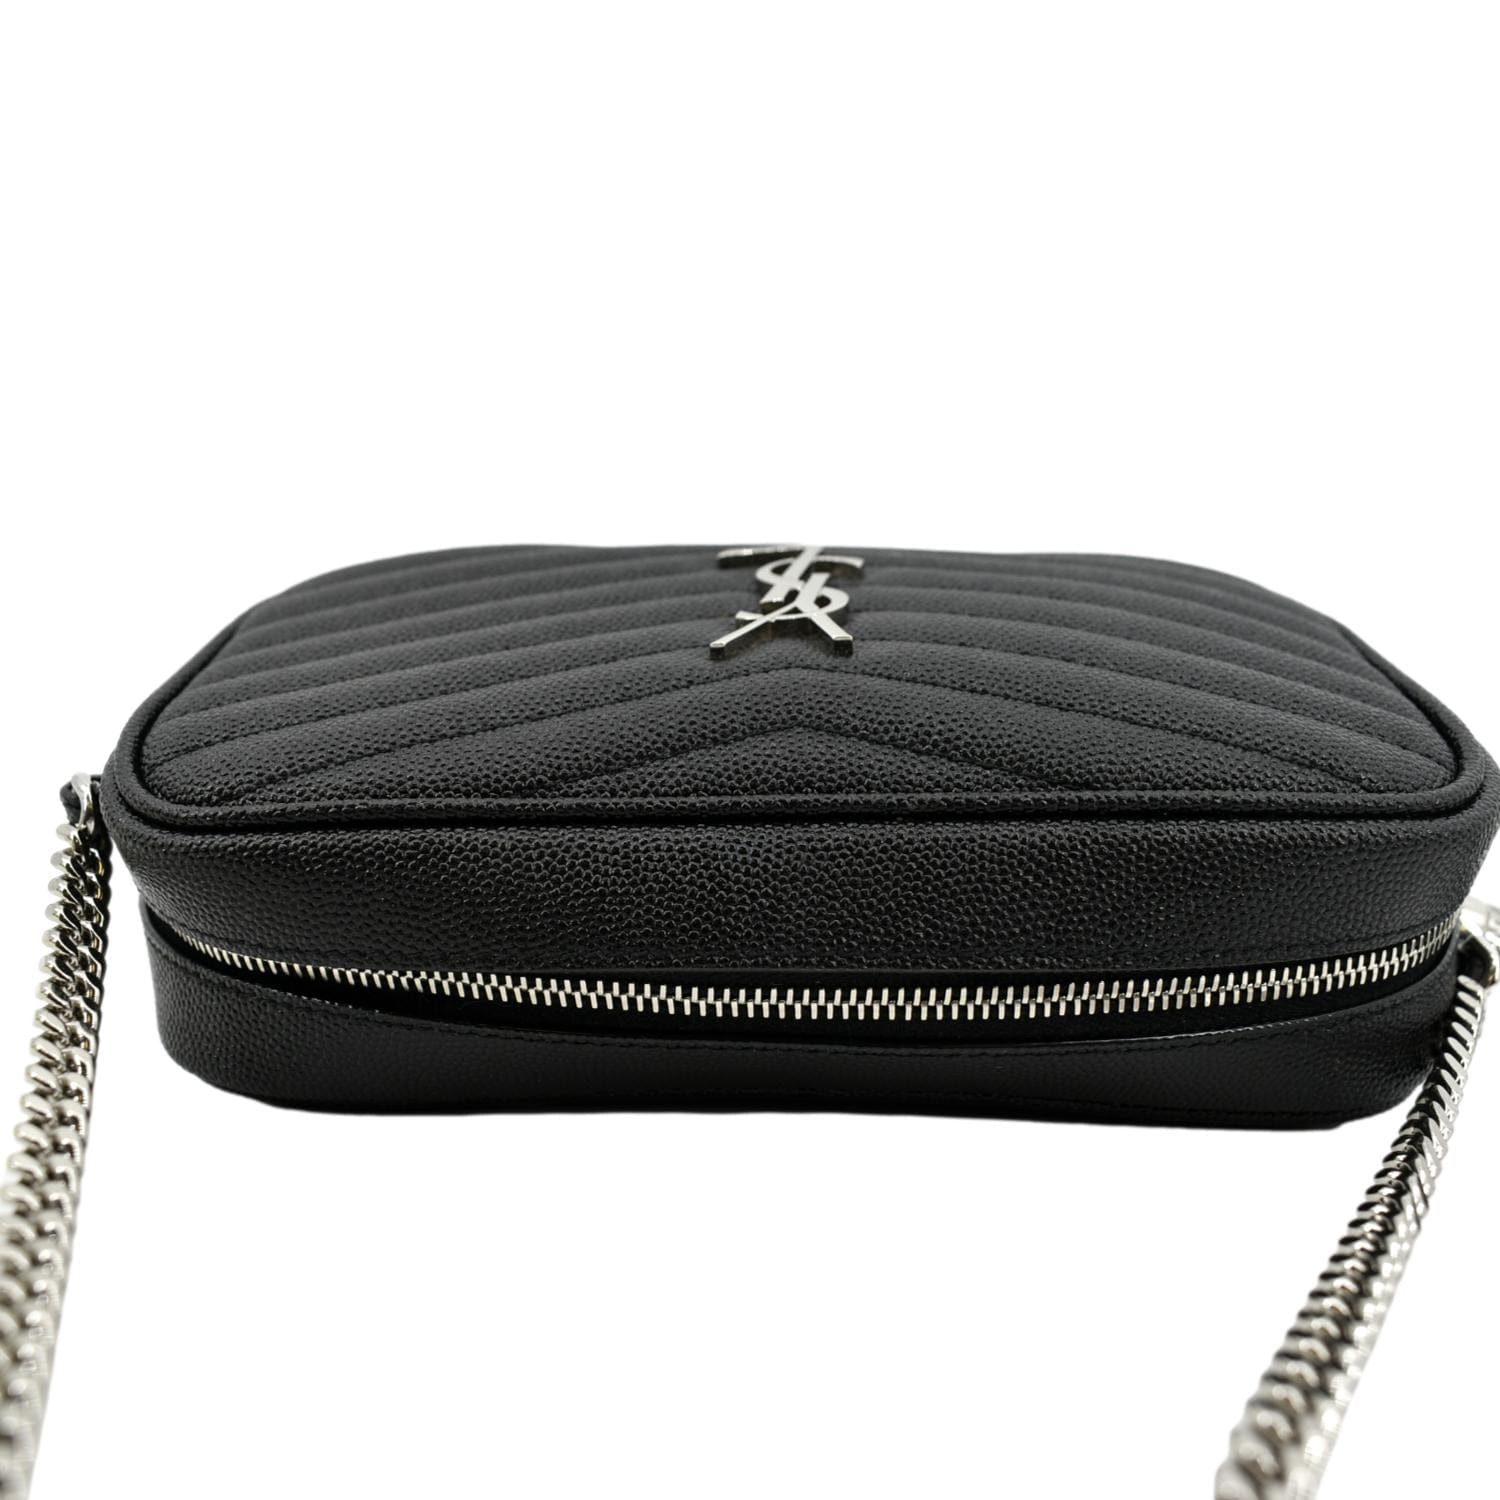 Lou Mini Leather Crossbody Bag in Black - Saint Laurent